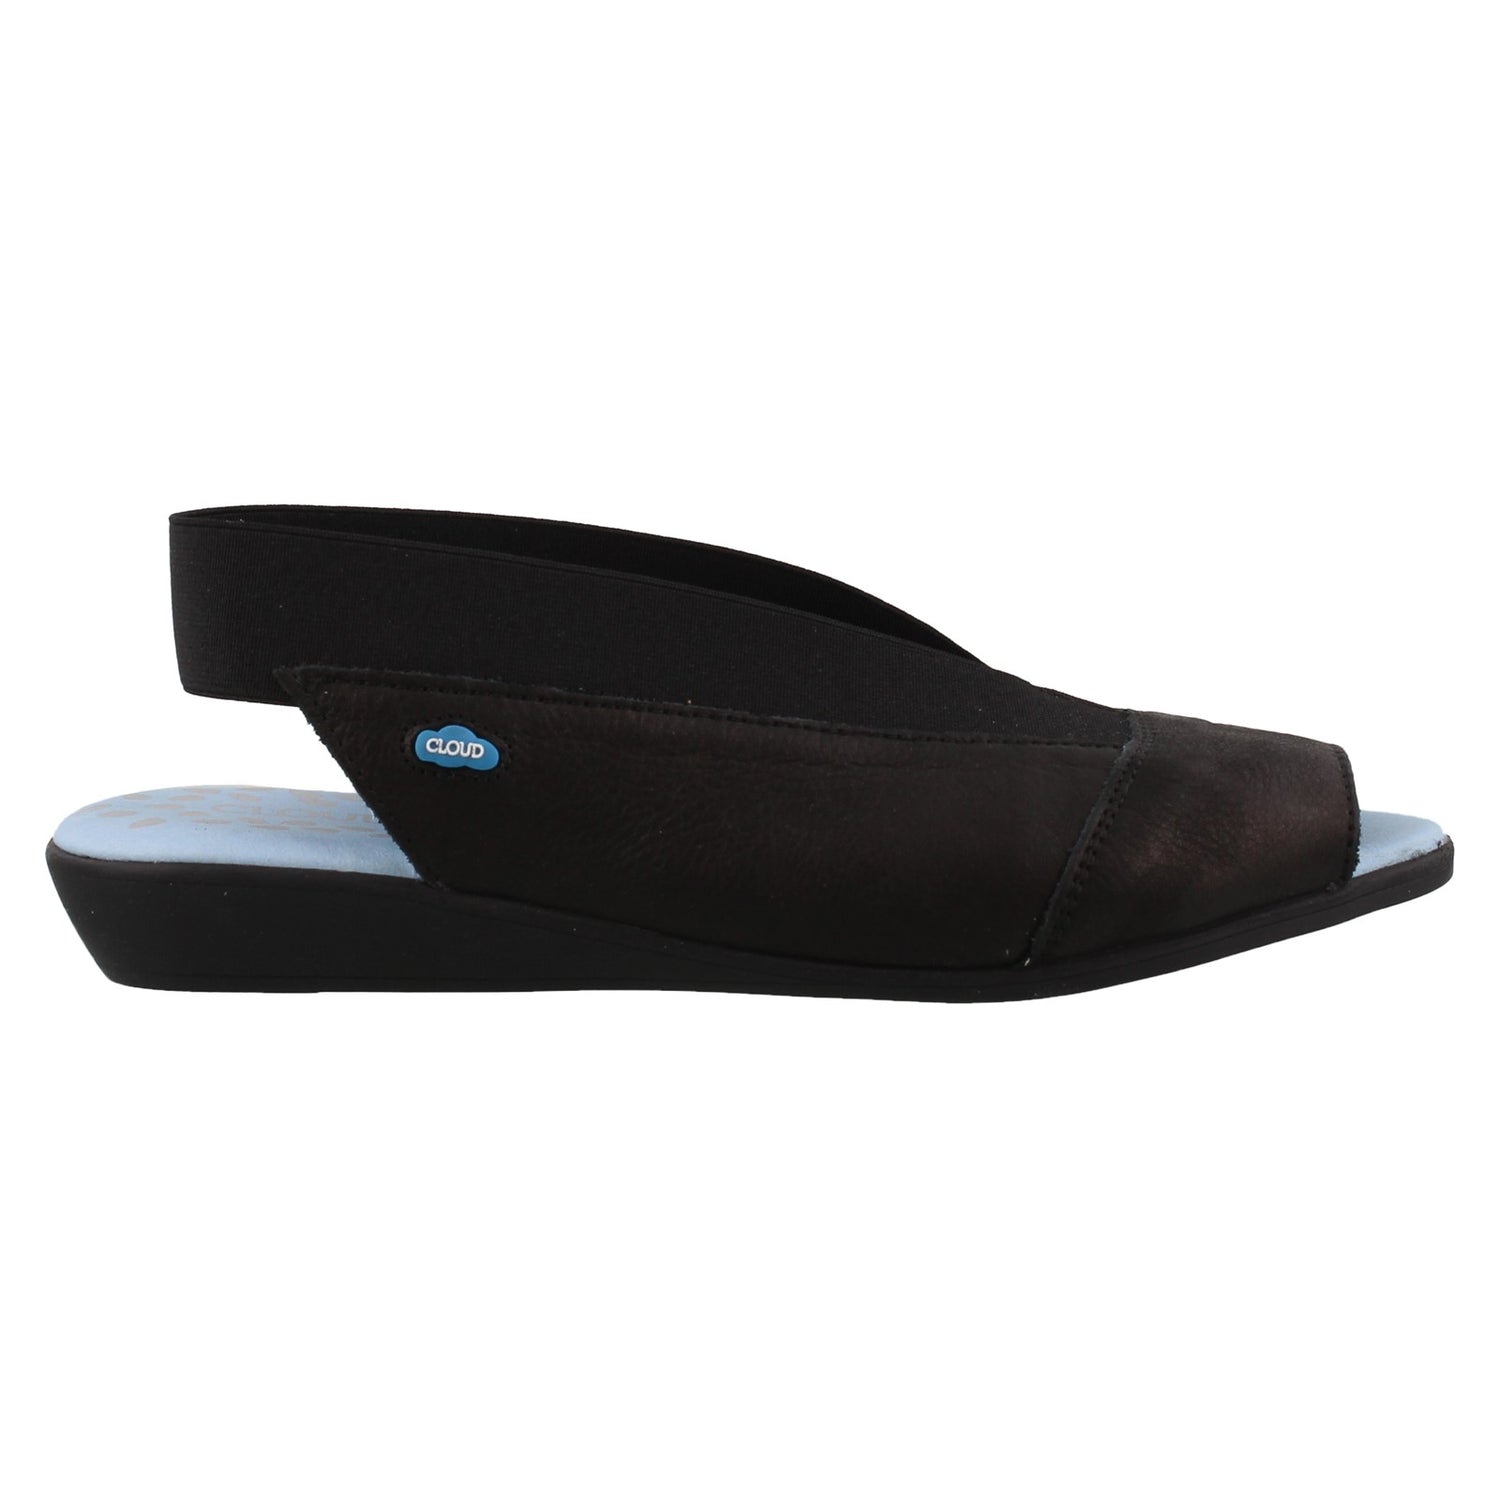 Peltz Shoes  Women's Cloud Caliber Flat Sandals BLACK CALIBER BLACK